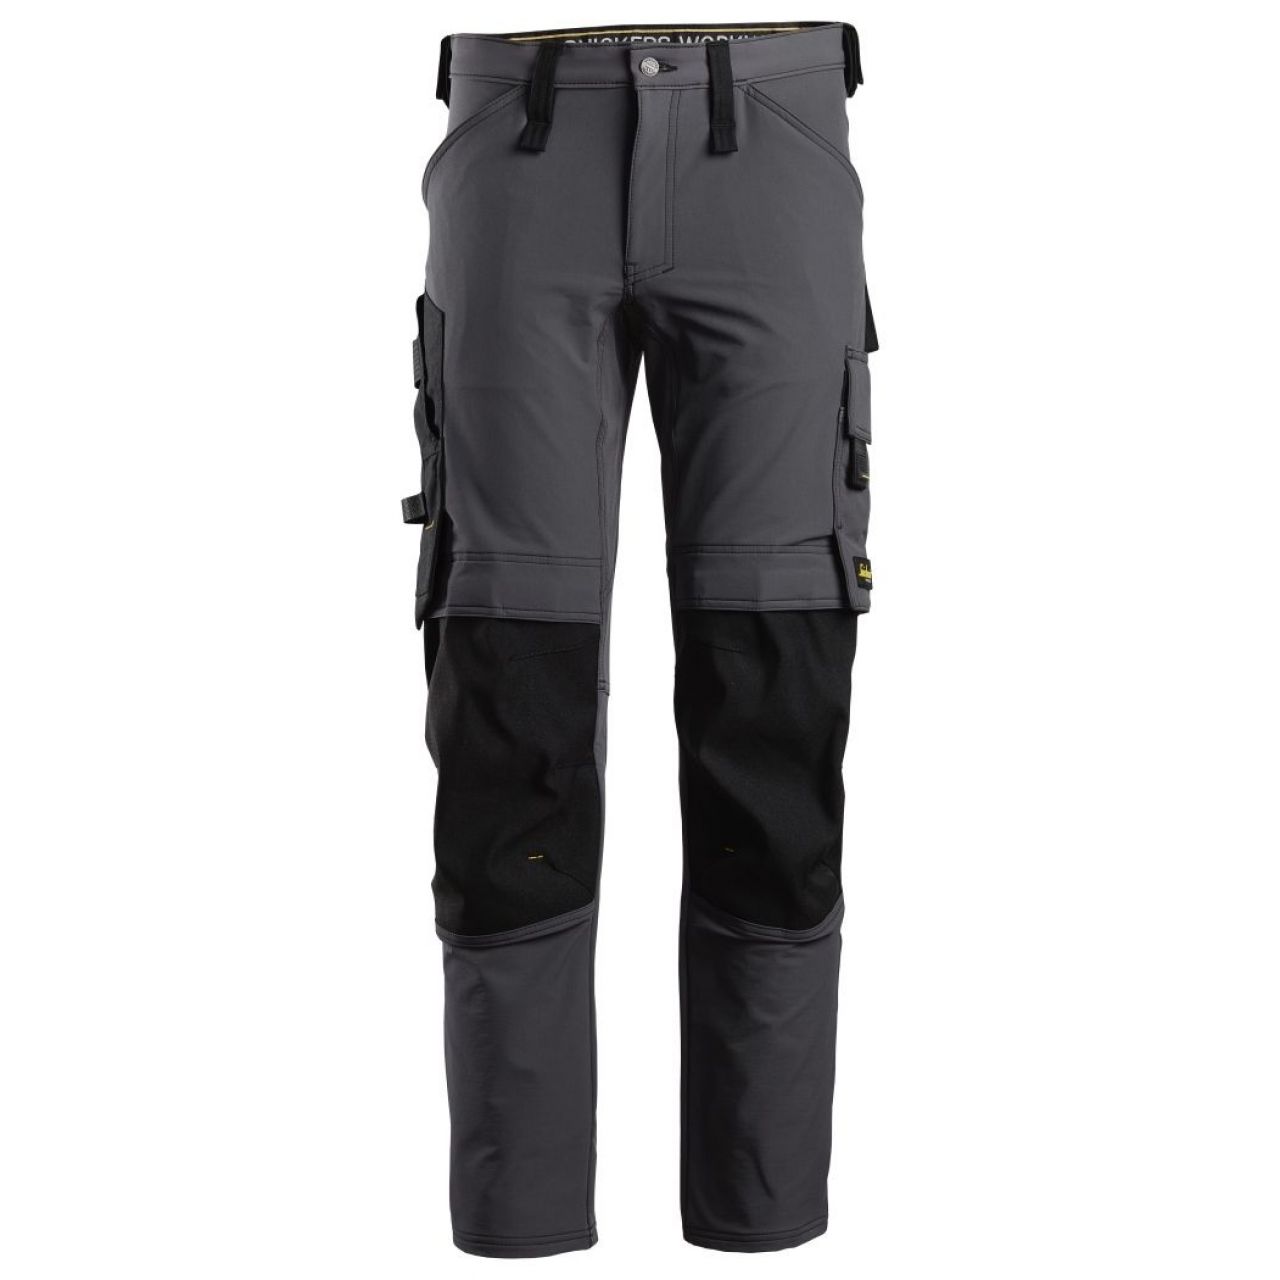 Pantalon elastico AllroundWork gris acero-negro talla 160